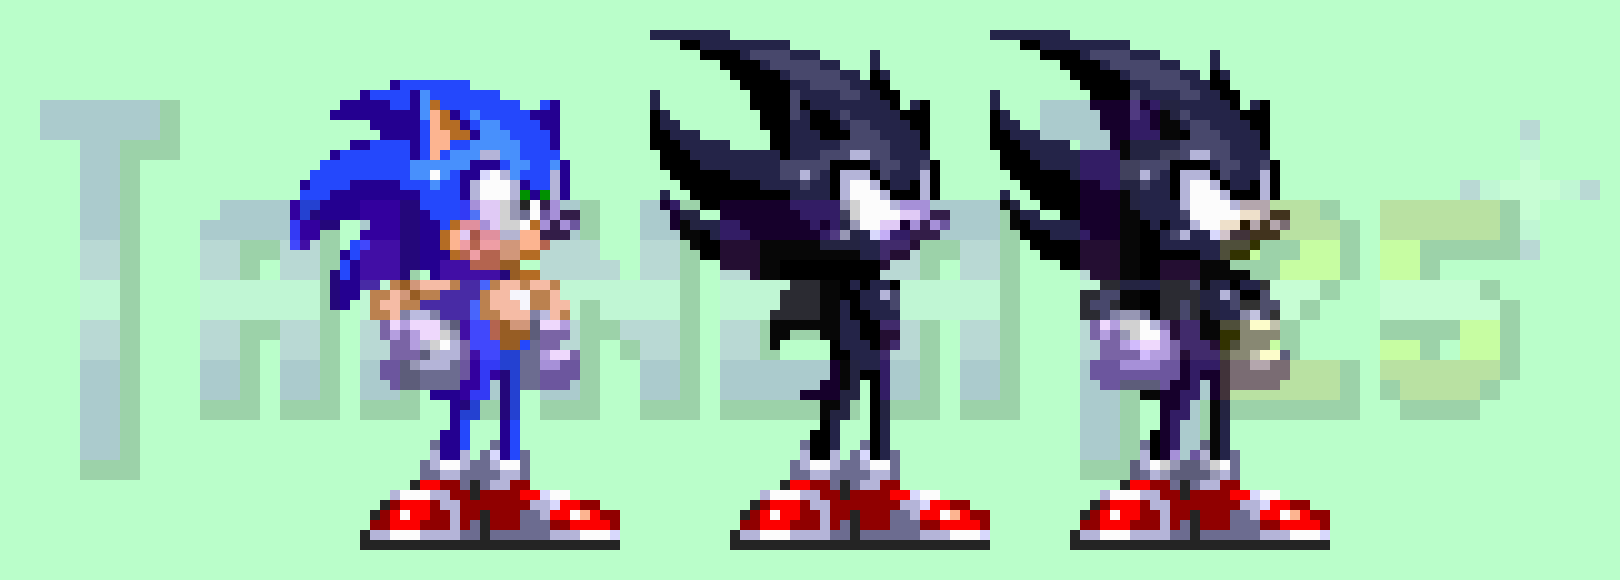 Sonic 3 Styled Dark Sonic by TannerTW25 on DeviantArt